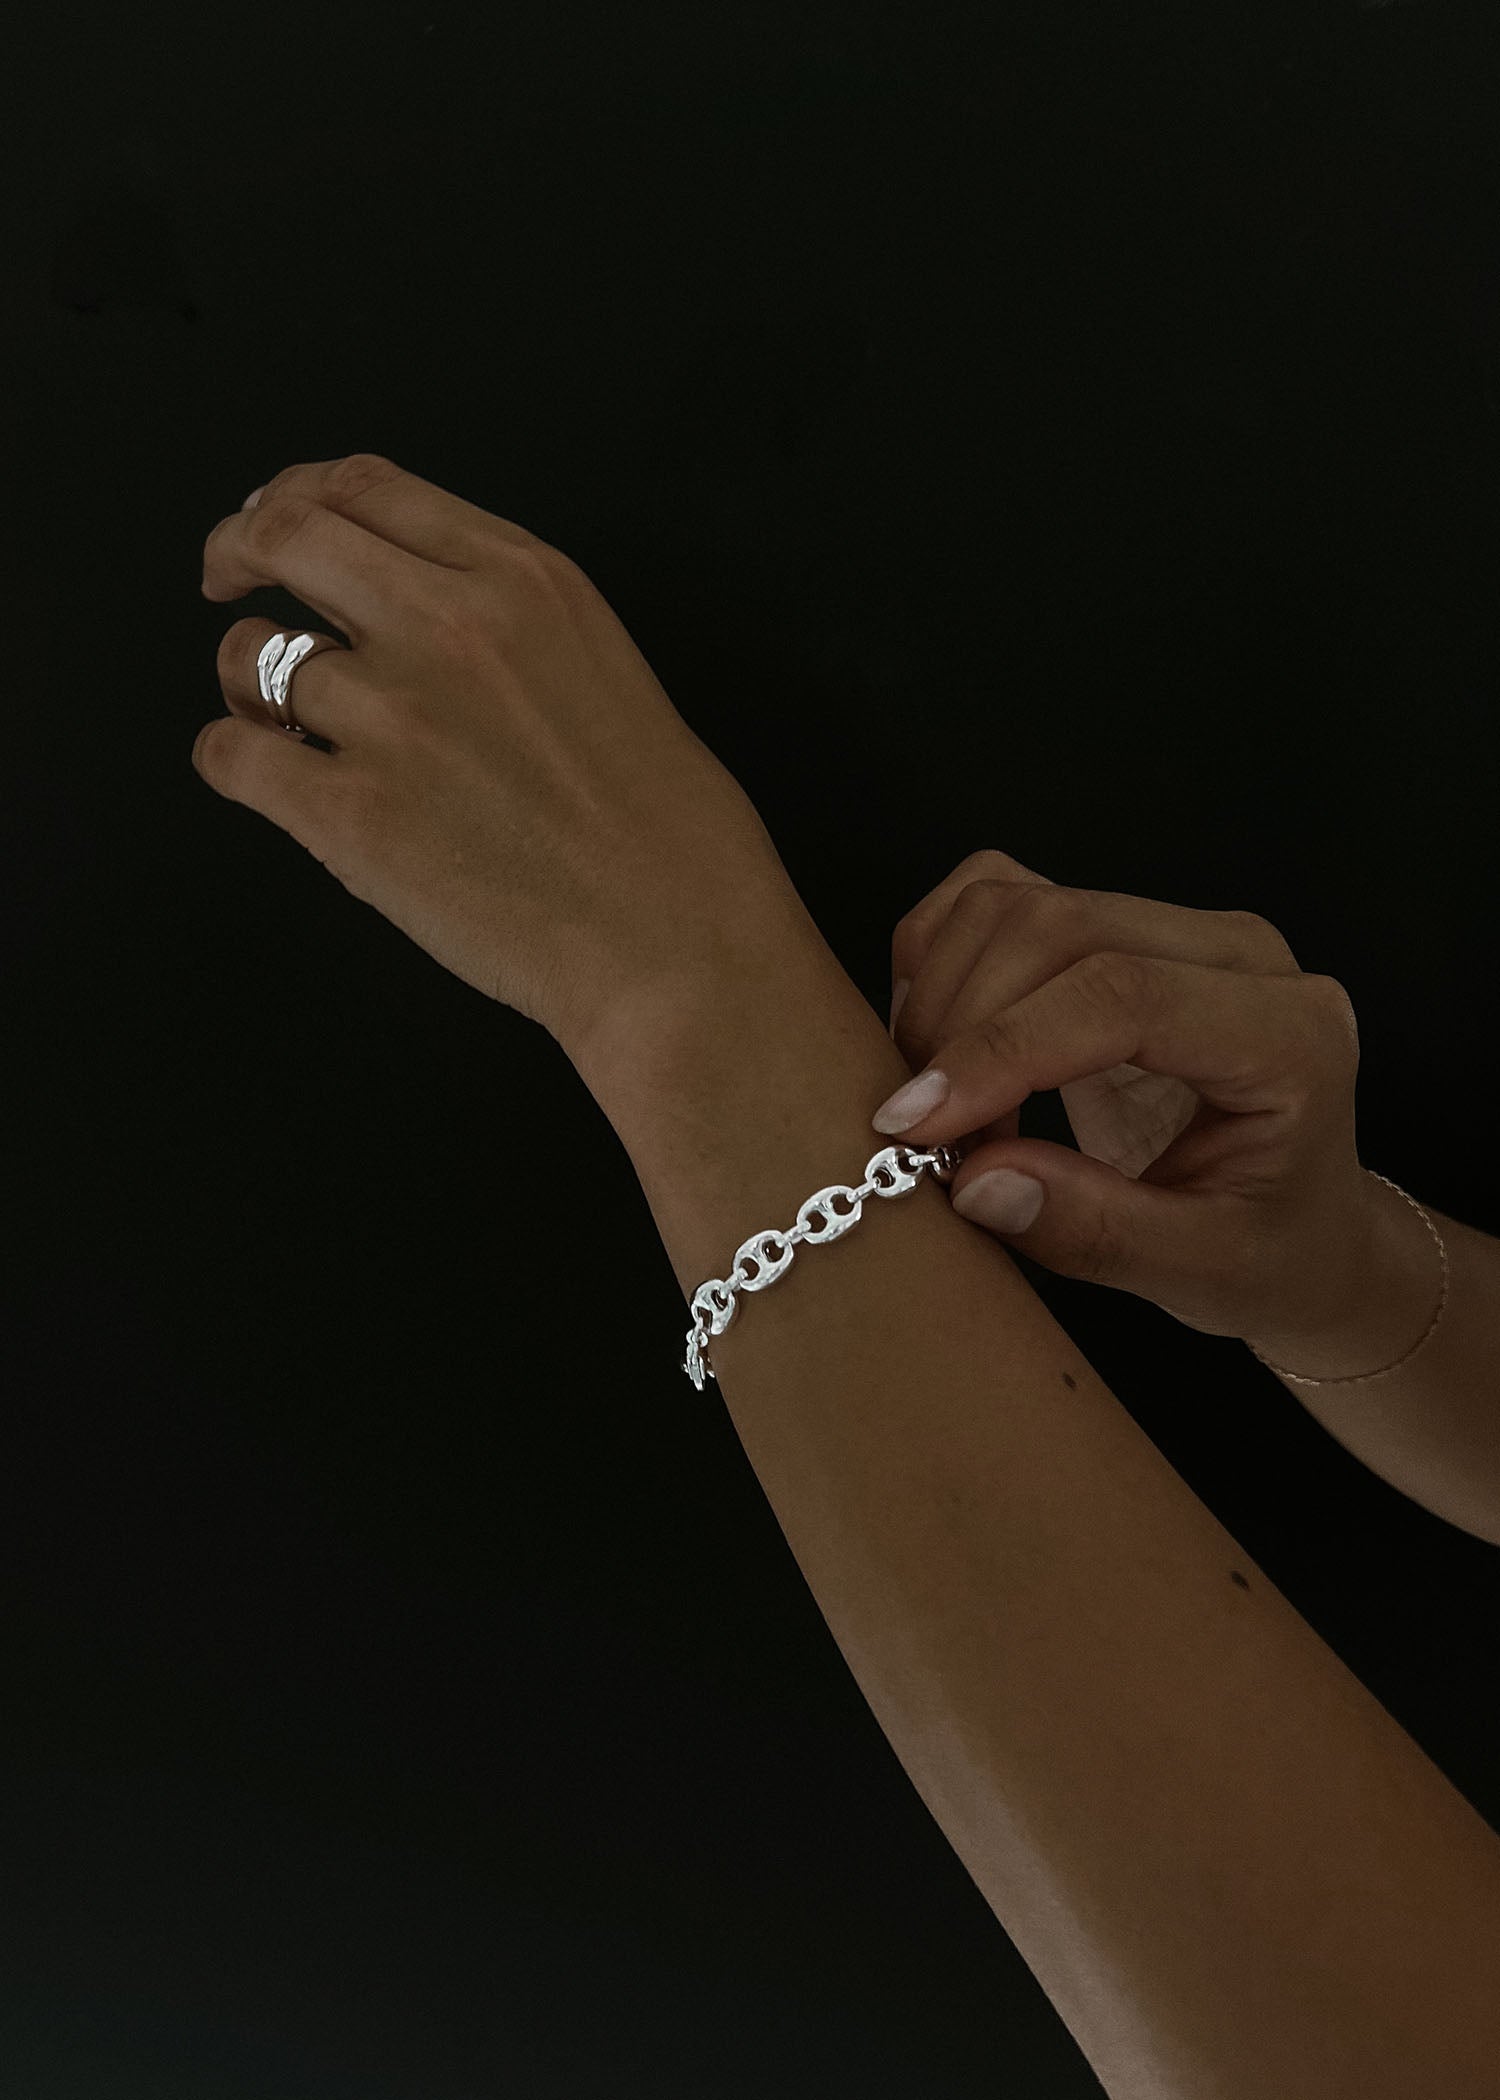 alt="Puffed Mariner Chain Bracelet"